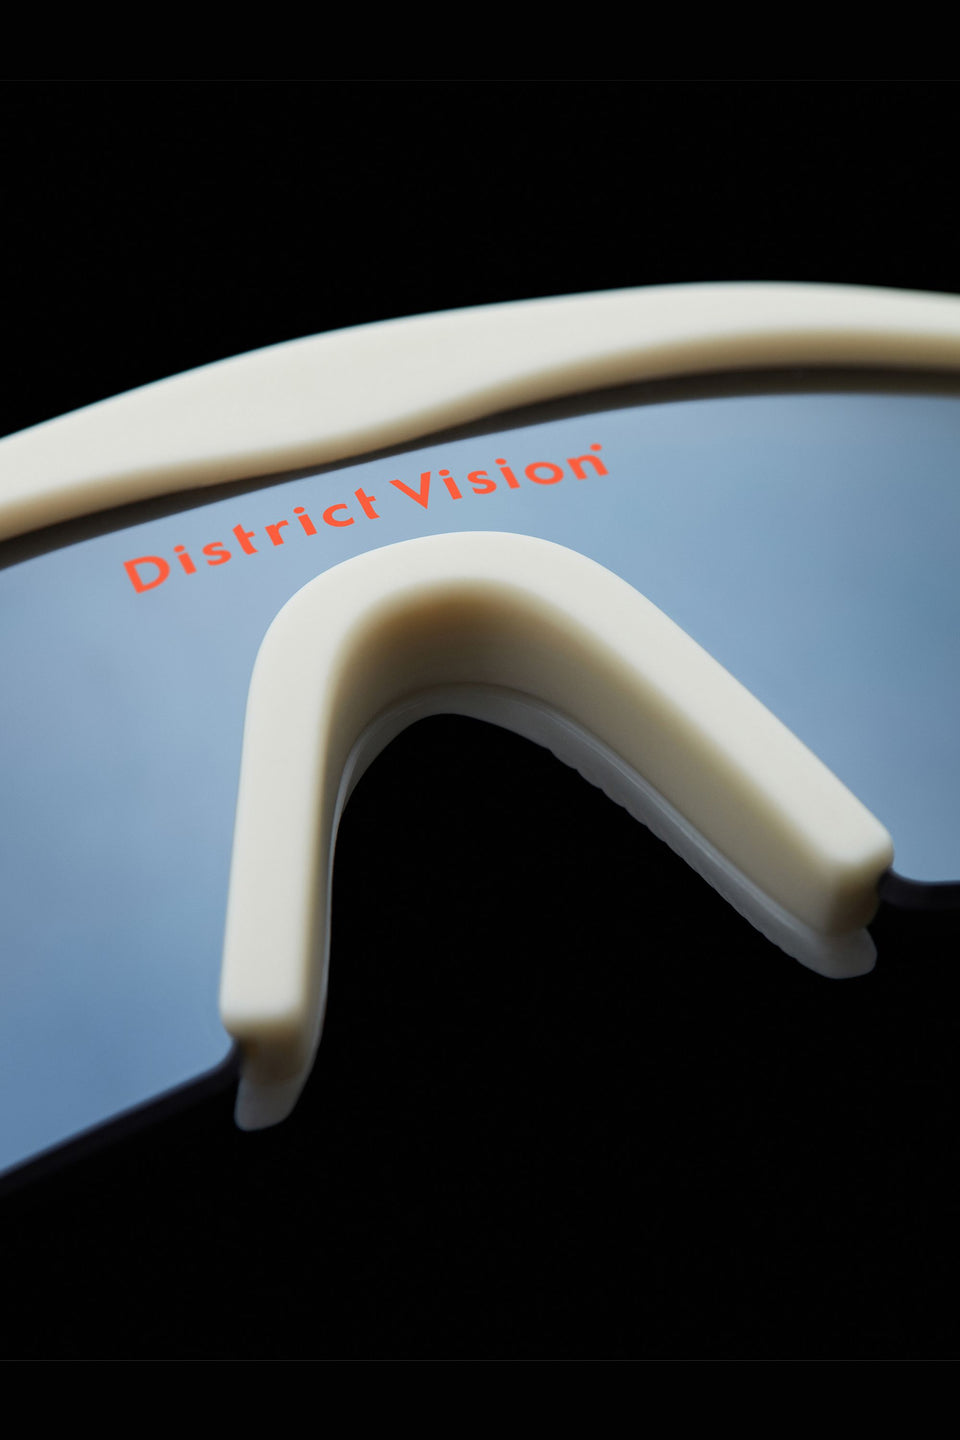 District Vision SS23 Koharu Eclipse Limestone D+ Onyx Mirror Calculus Victoria BC Canada